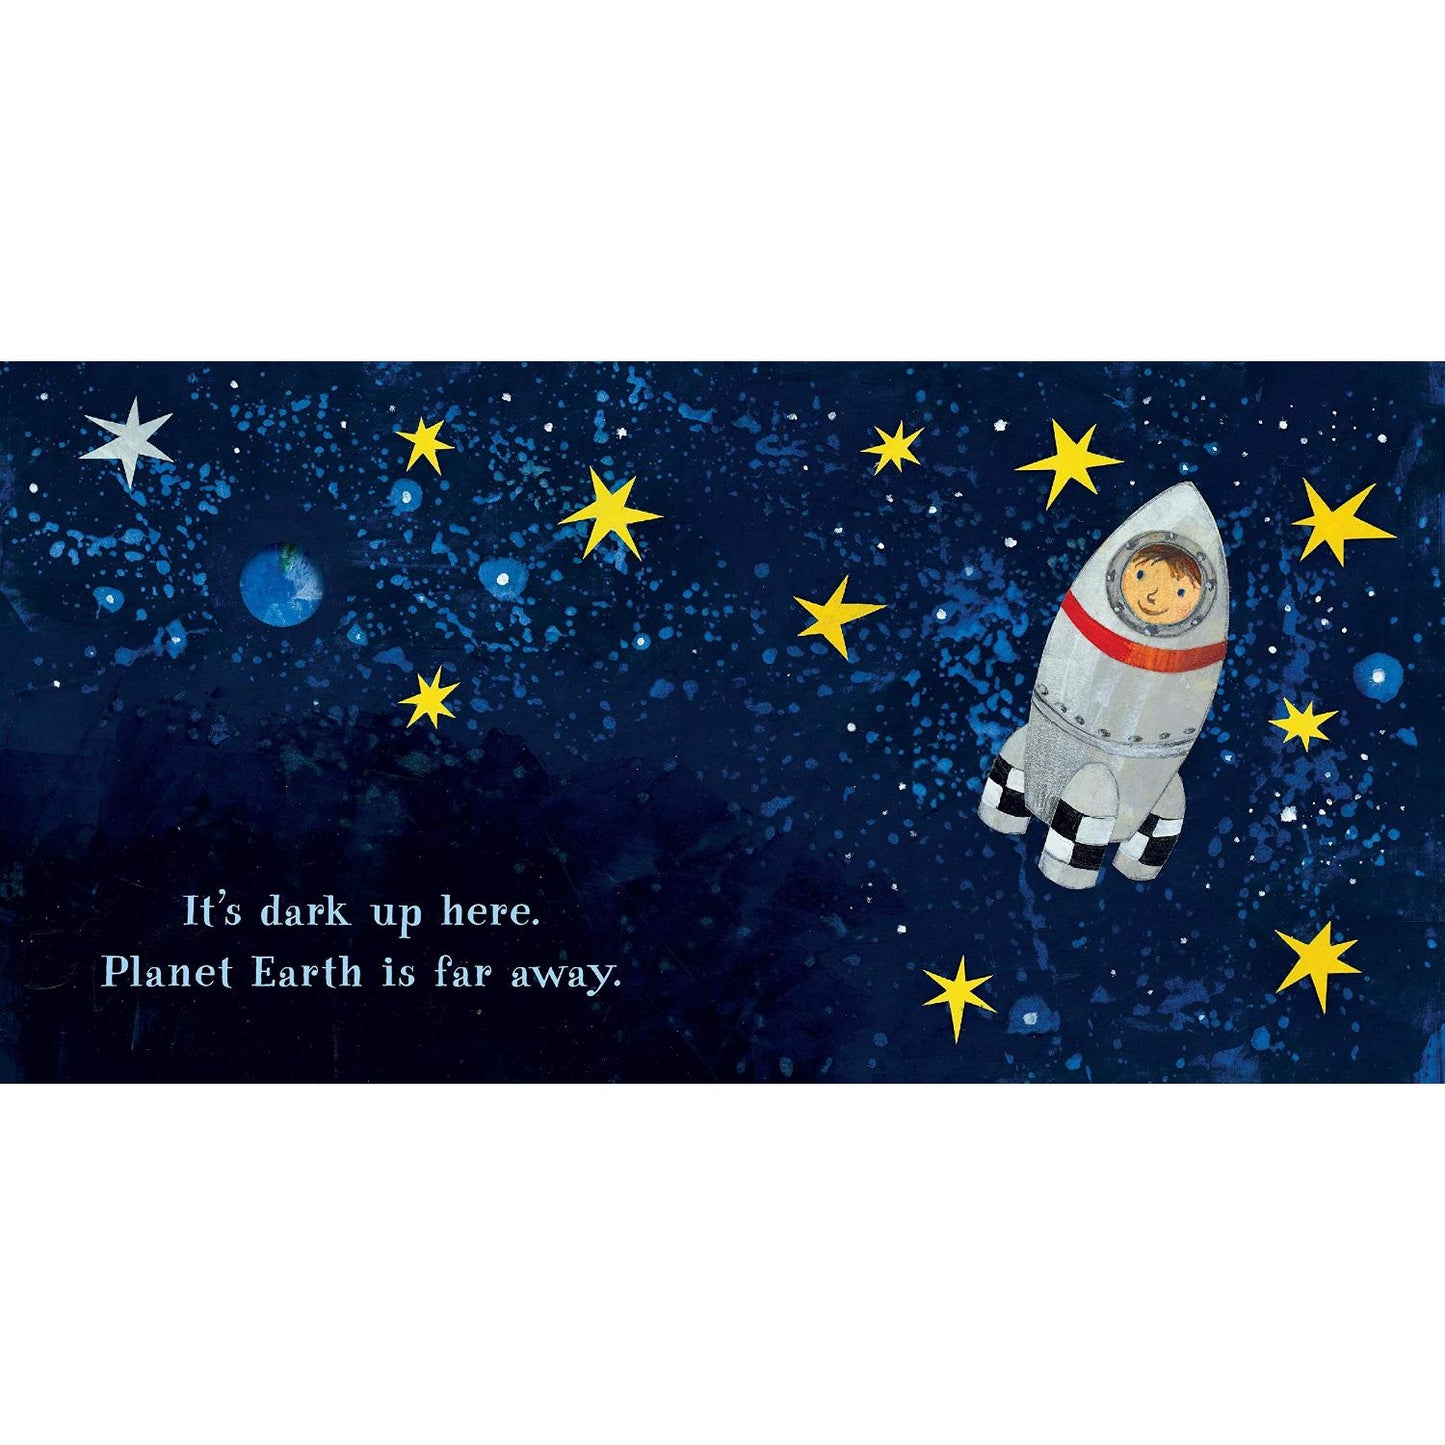 Let's Go into Space! | Board Book | Children’s Book on Aeronautics & Space